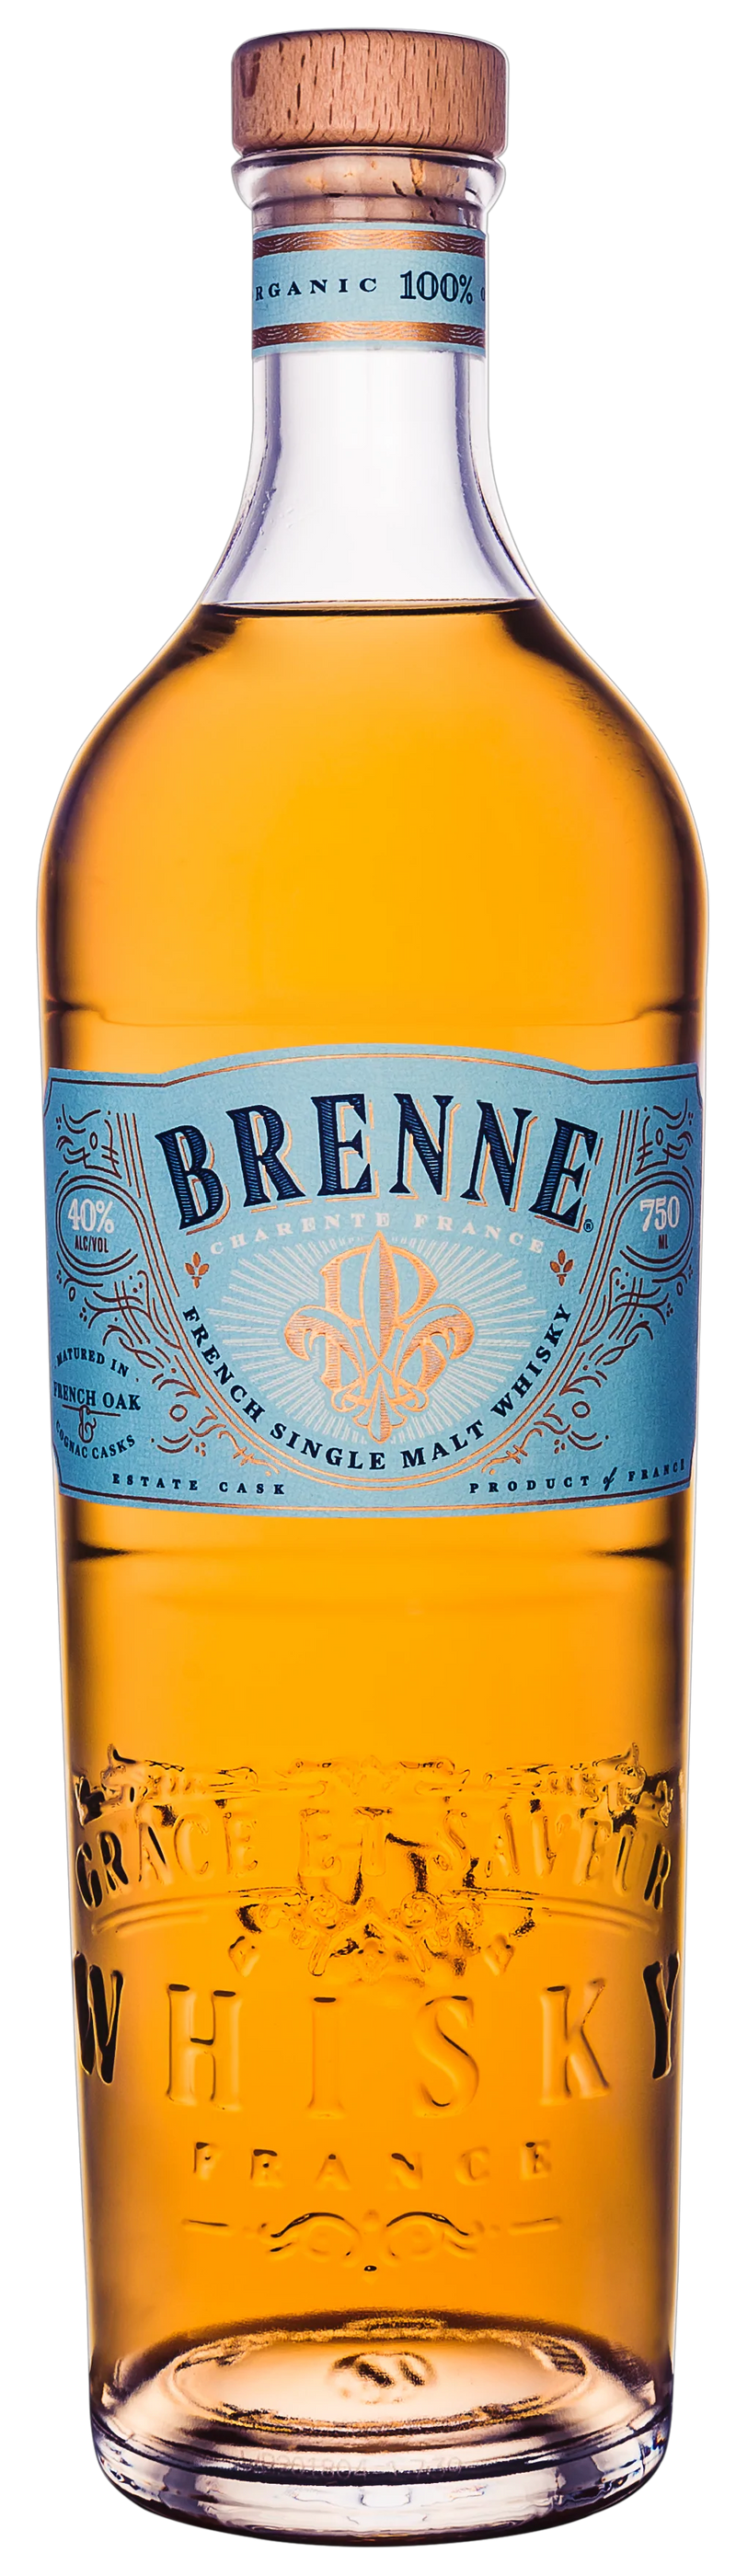 Brenne Estate Cask French Single Malt Whisky